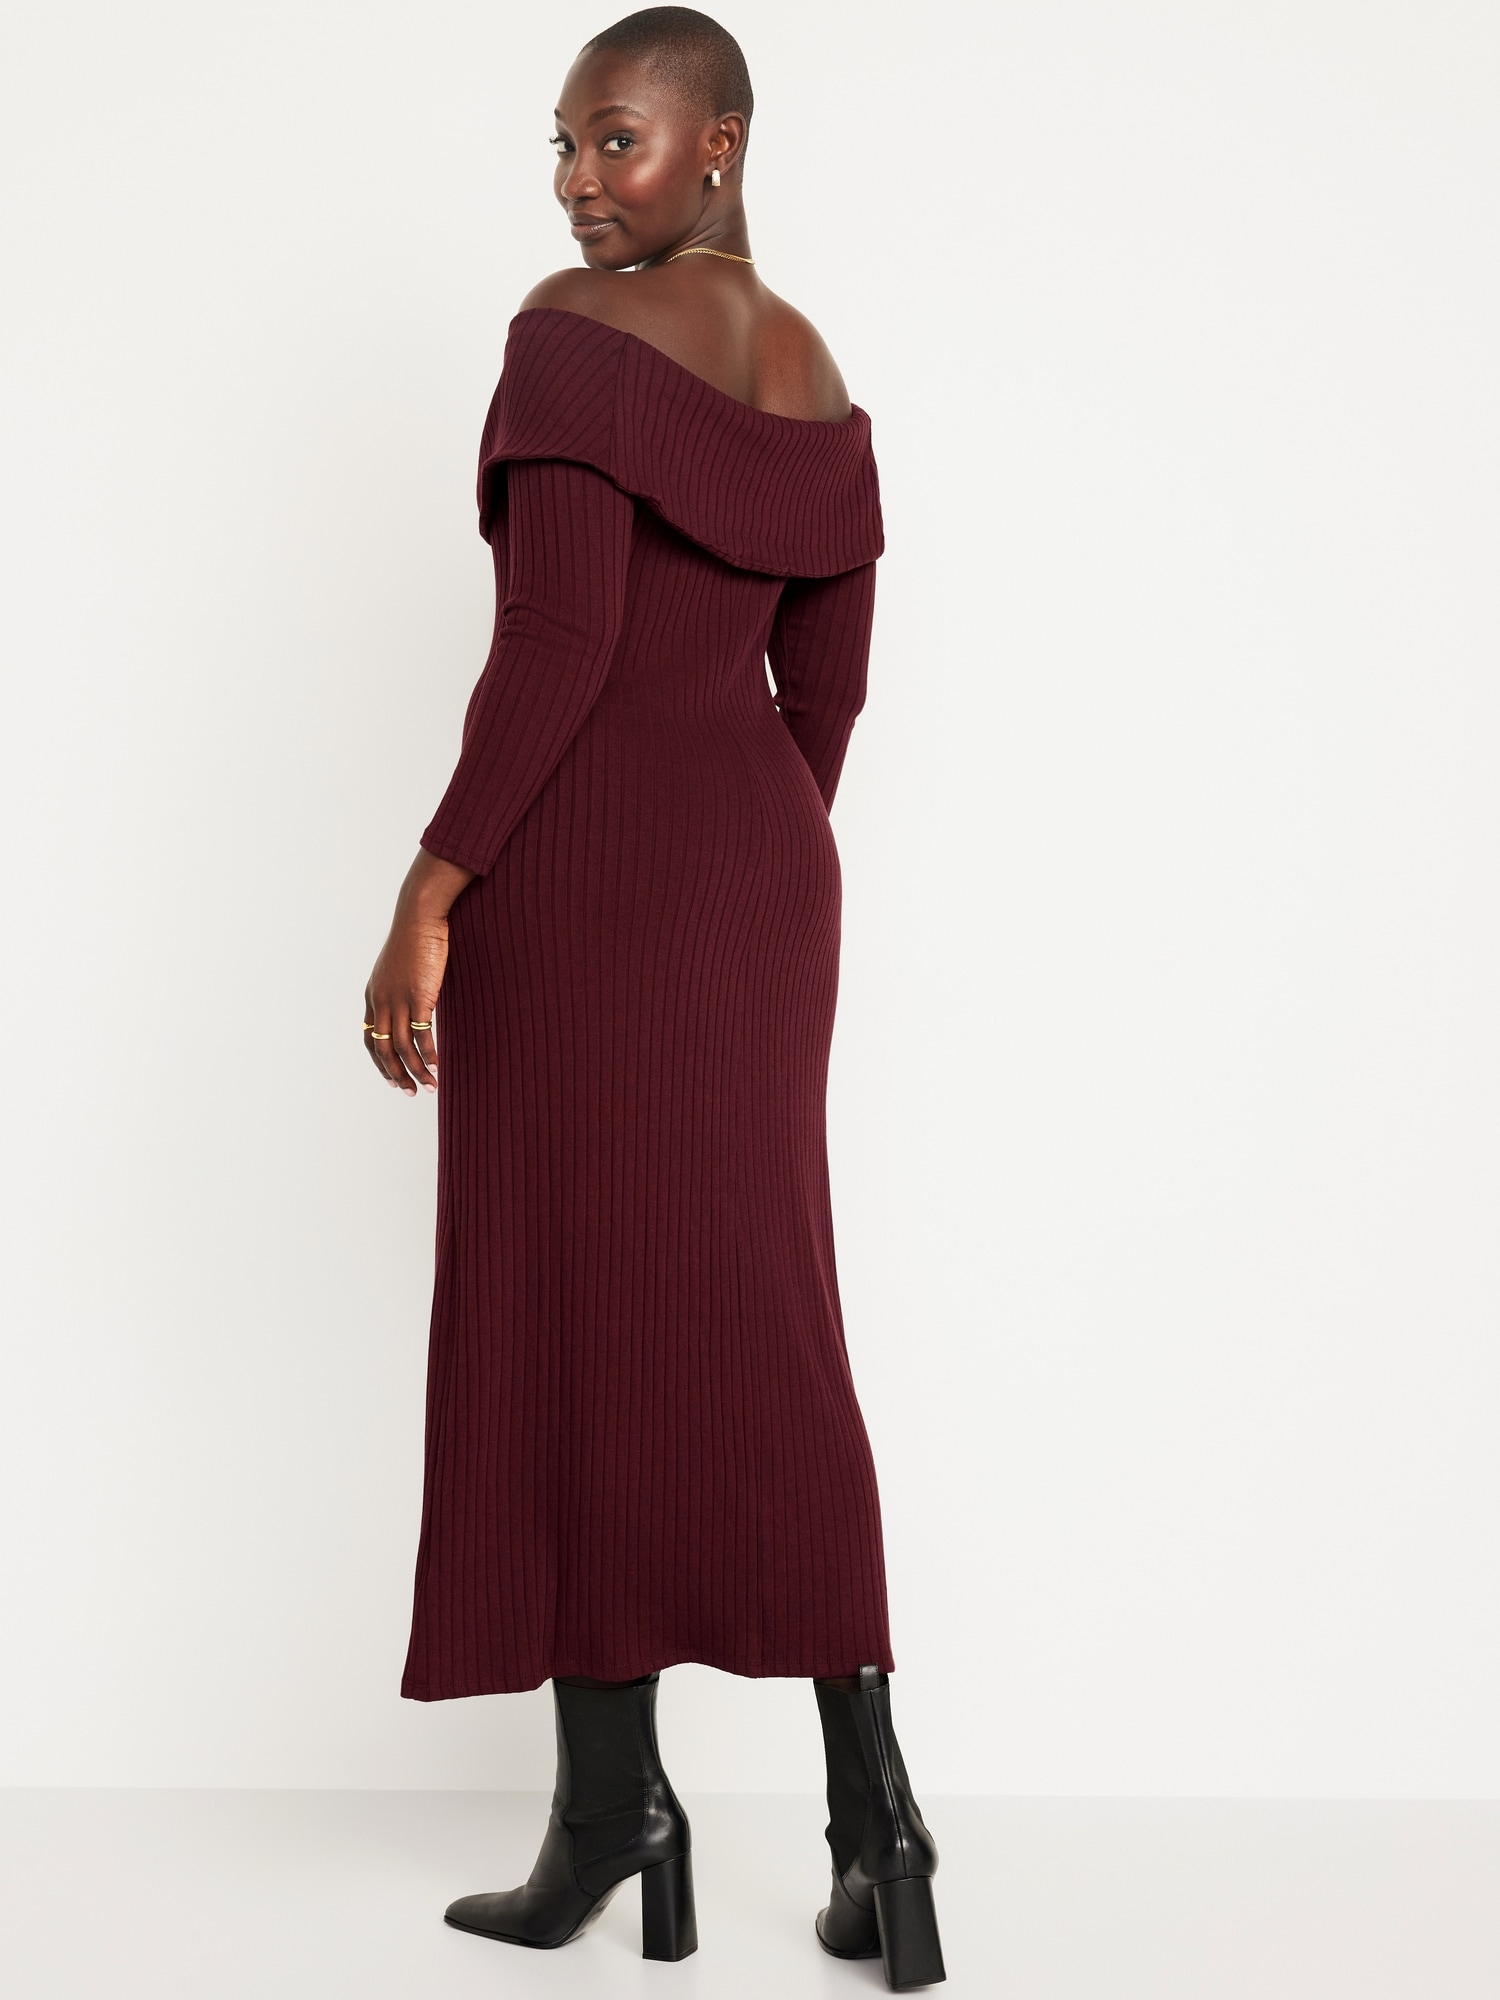 TAPIYANG Womens Elegant Maxi Dress Plus Size Cold Shoulder Short